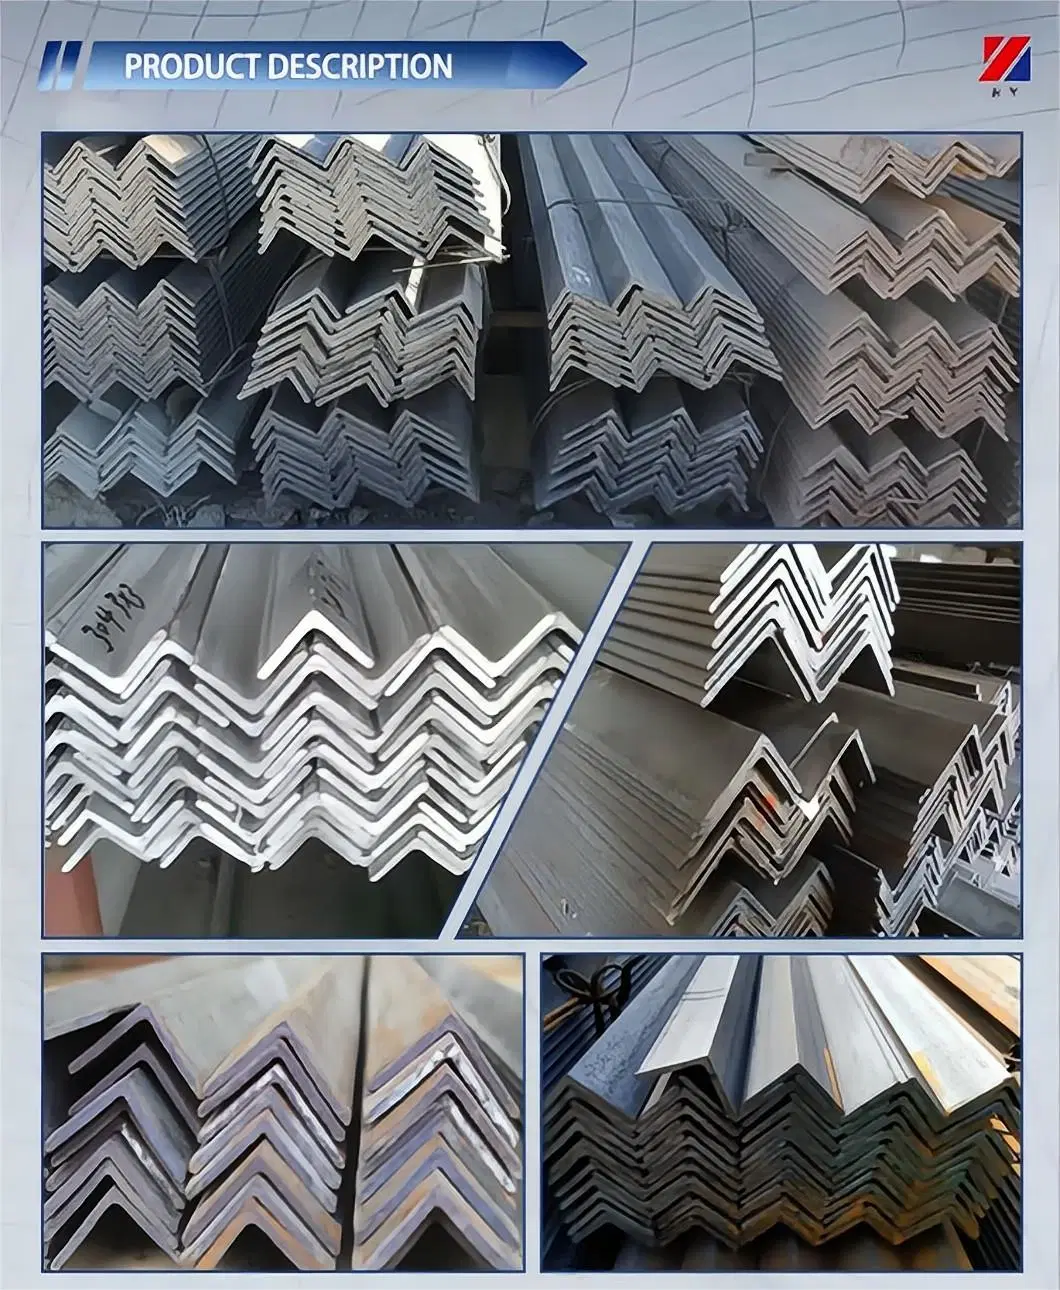 Carbon Mild Steel Ms Low Hot/Cold Rolled Carbon Steel Coil/Sheet/Pipe/Bar/Plate/Strip/Roll Round/Flat Bar/Profiel/Angle/Channal/Beam/Billet/Ingot/Rebar Sheet